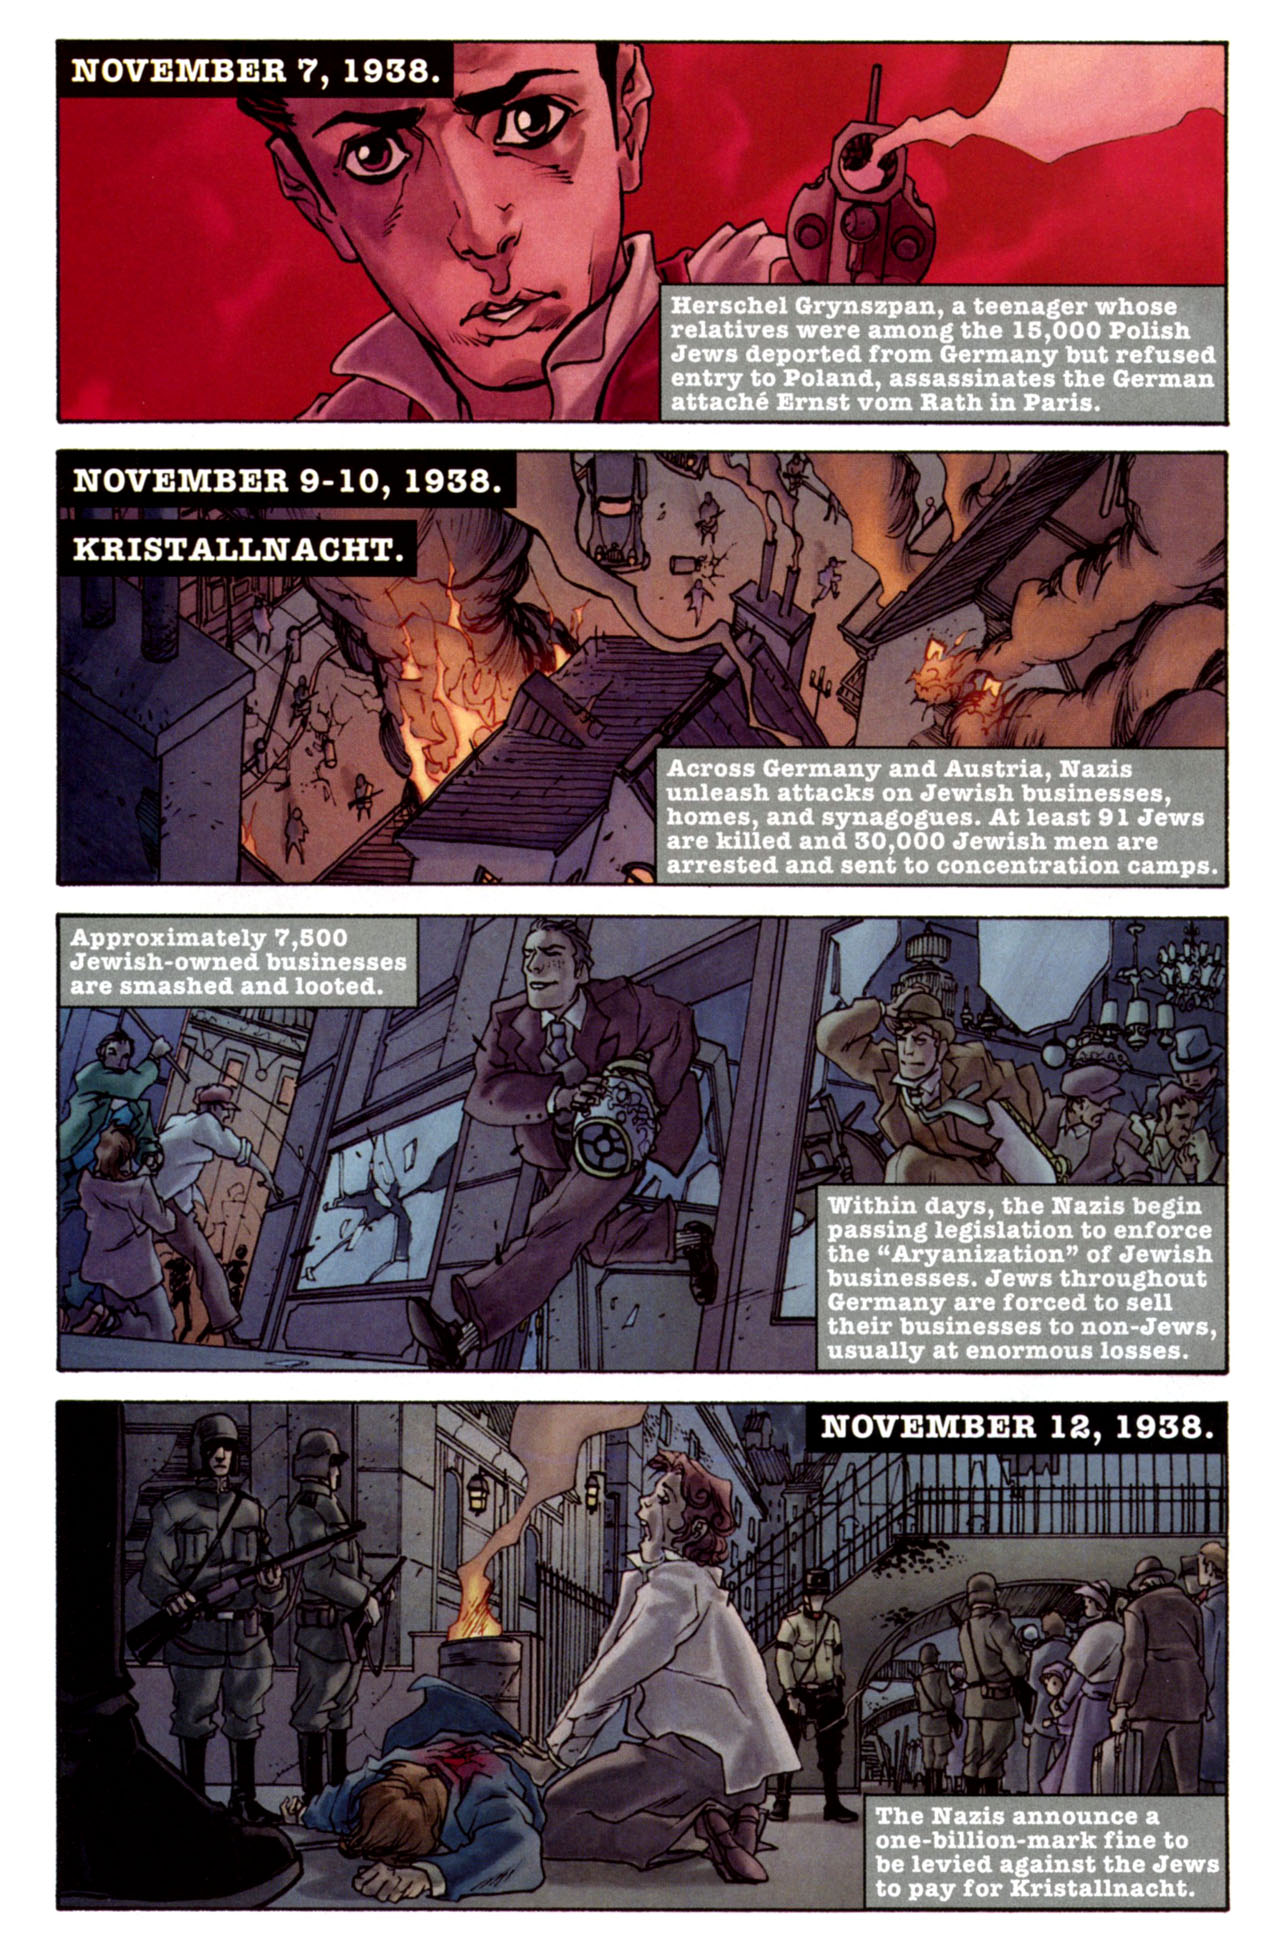 X-Men: Magneto Testament #2 - Part 2 of 5 